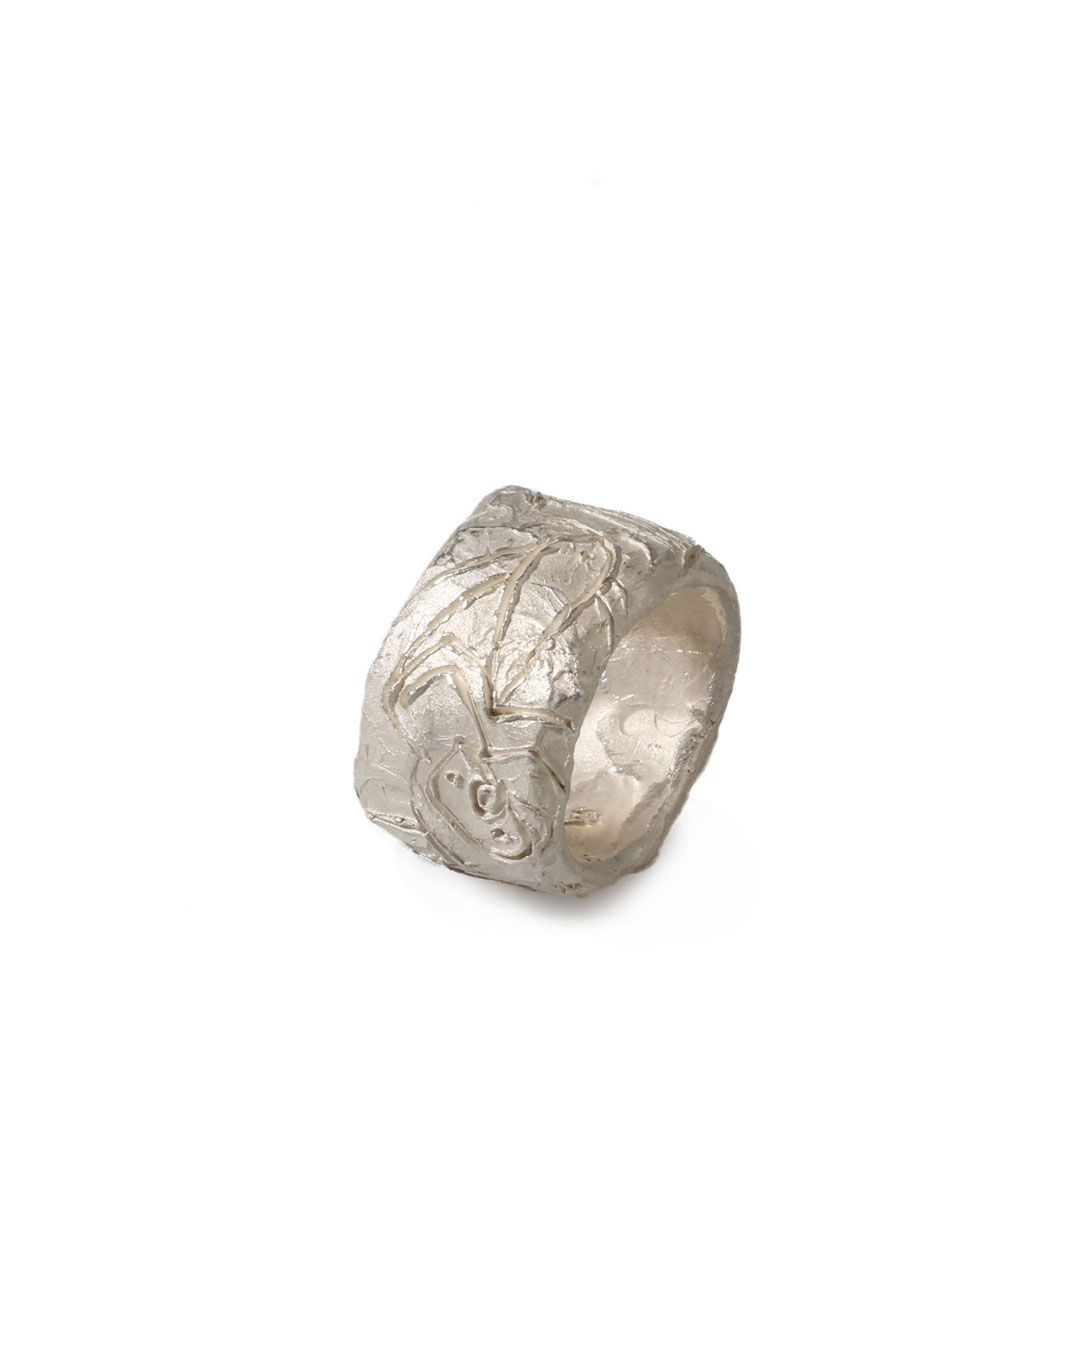 Juliane Brandes, untitled, 2014, ring; silver, 24 x 15 mm, €730